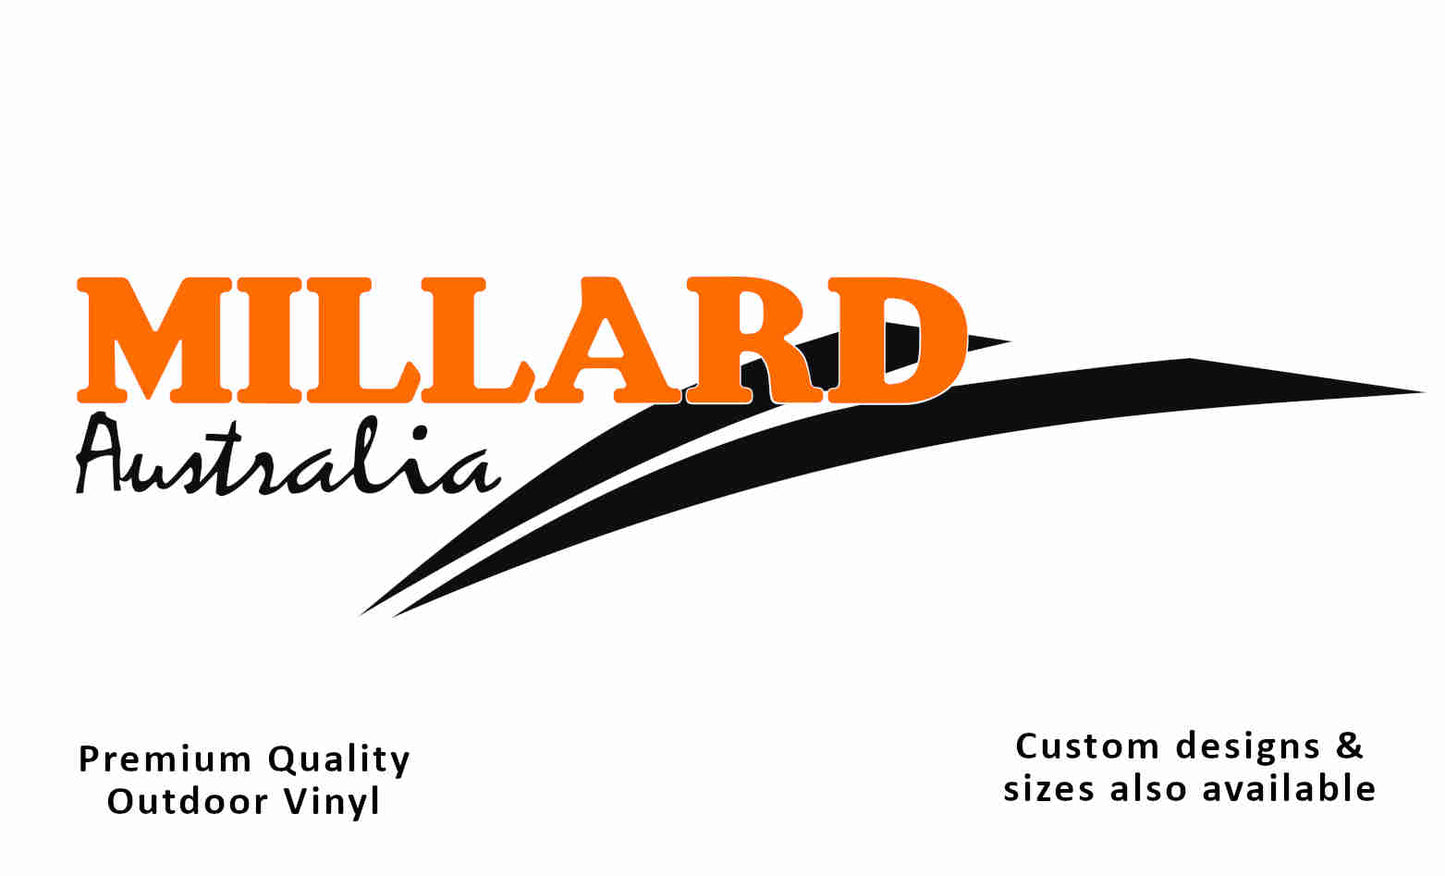 Millard Australia caravan vinyl replacement decal sticker in black and pastel orange.